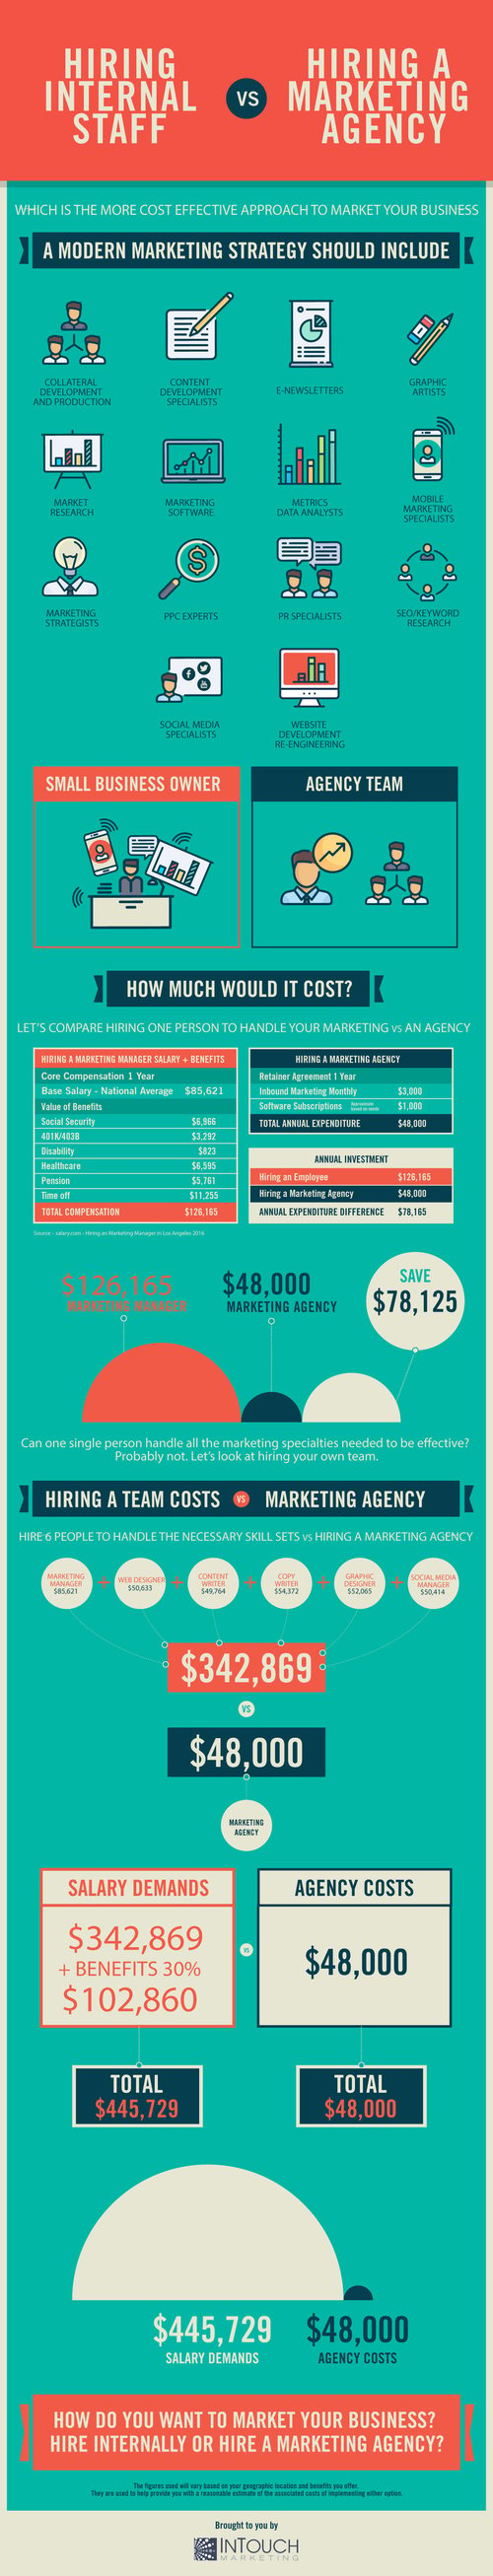 benefits of hiring a marketing agency